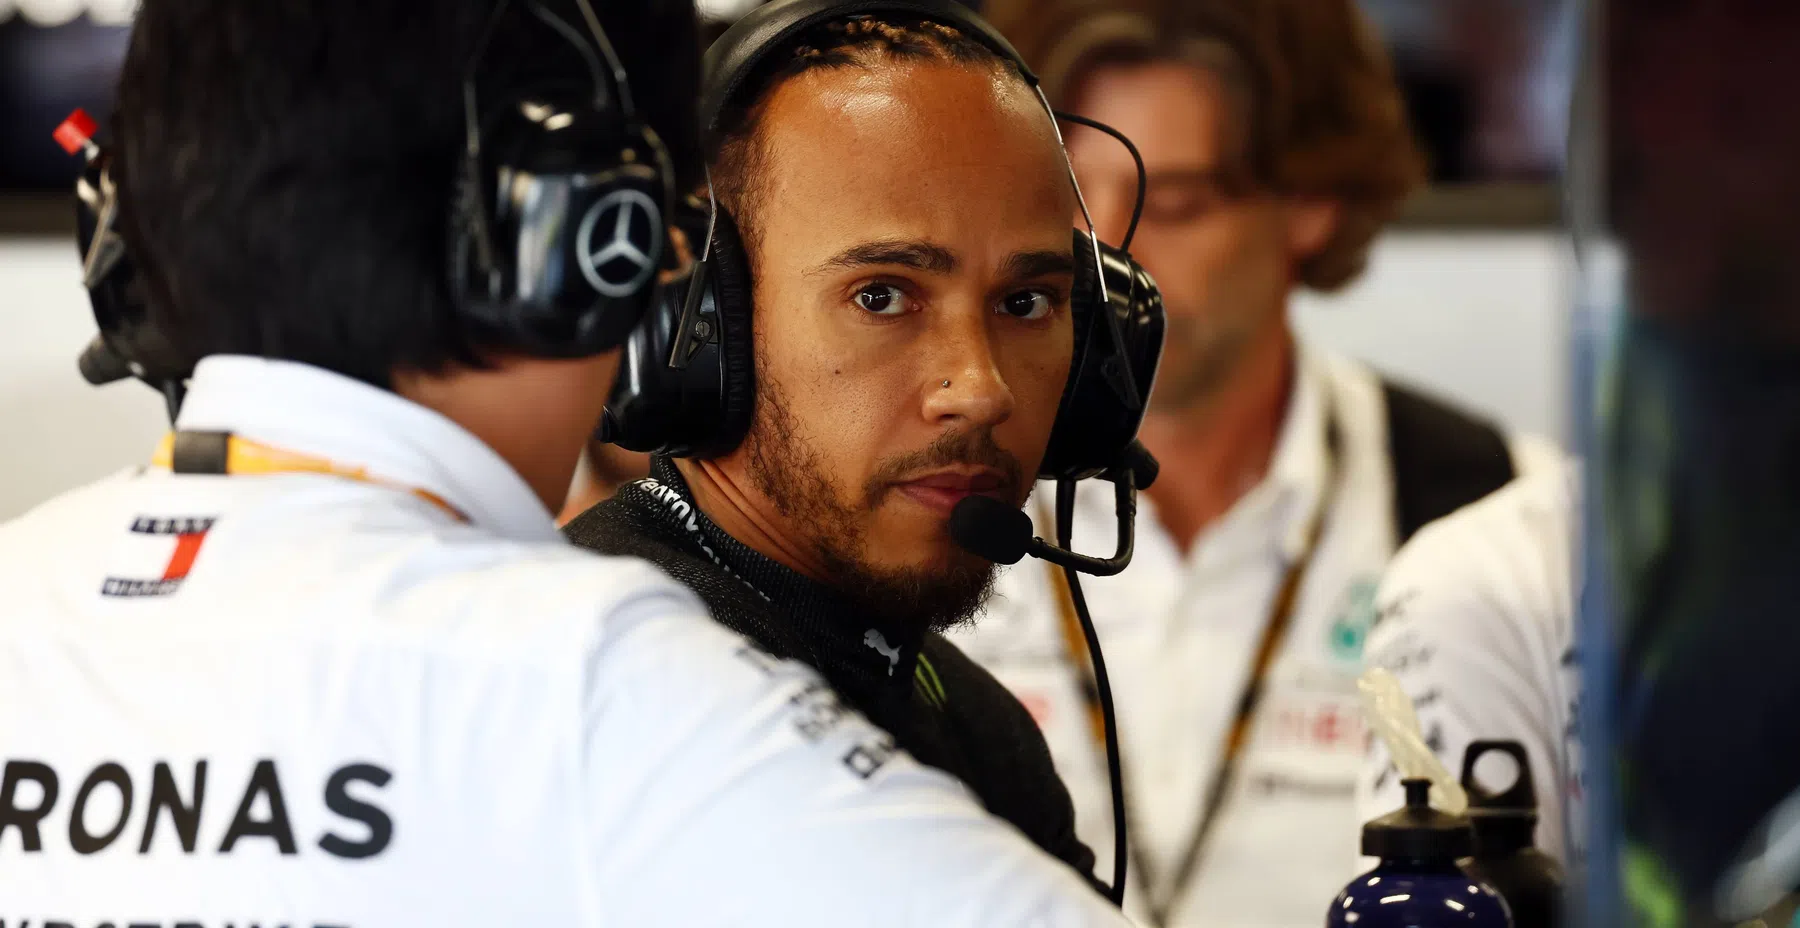 Hamilton agradecido apesar do ano difícil na F1